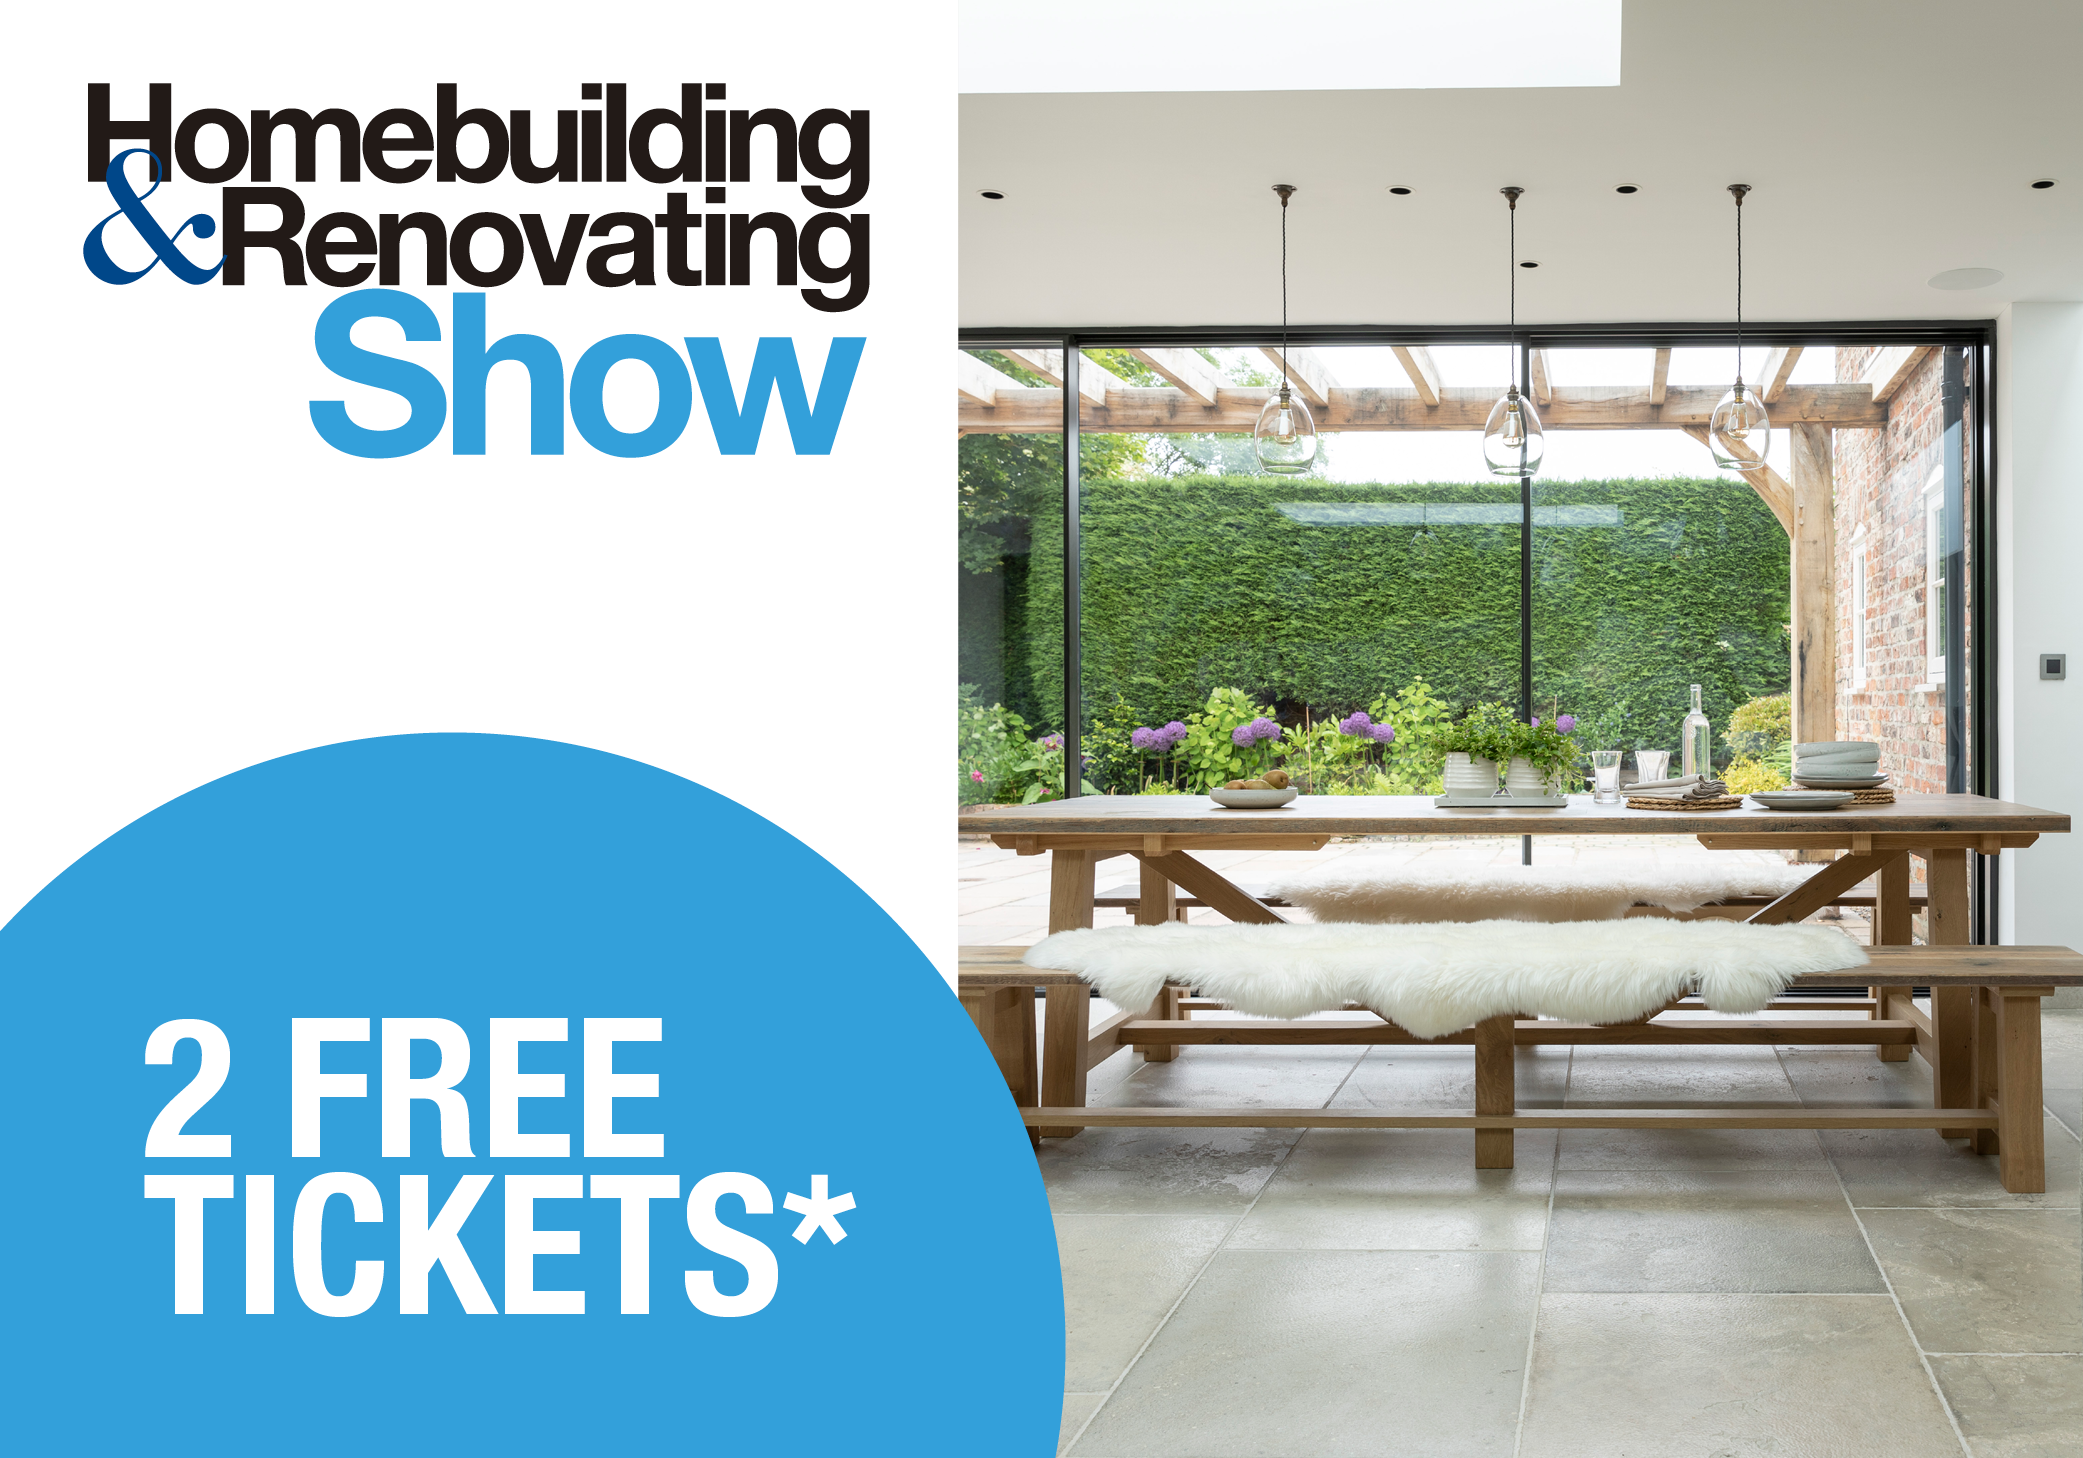 Southern Homebuilding & Renovating Show - Homebuilding & Renovating Show